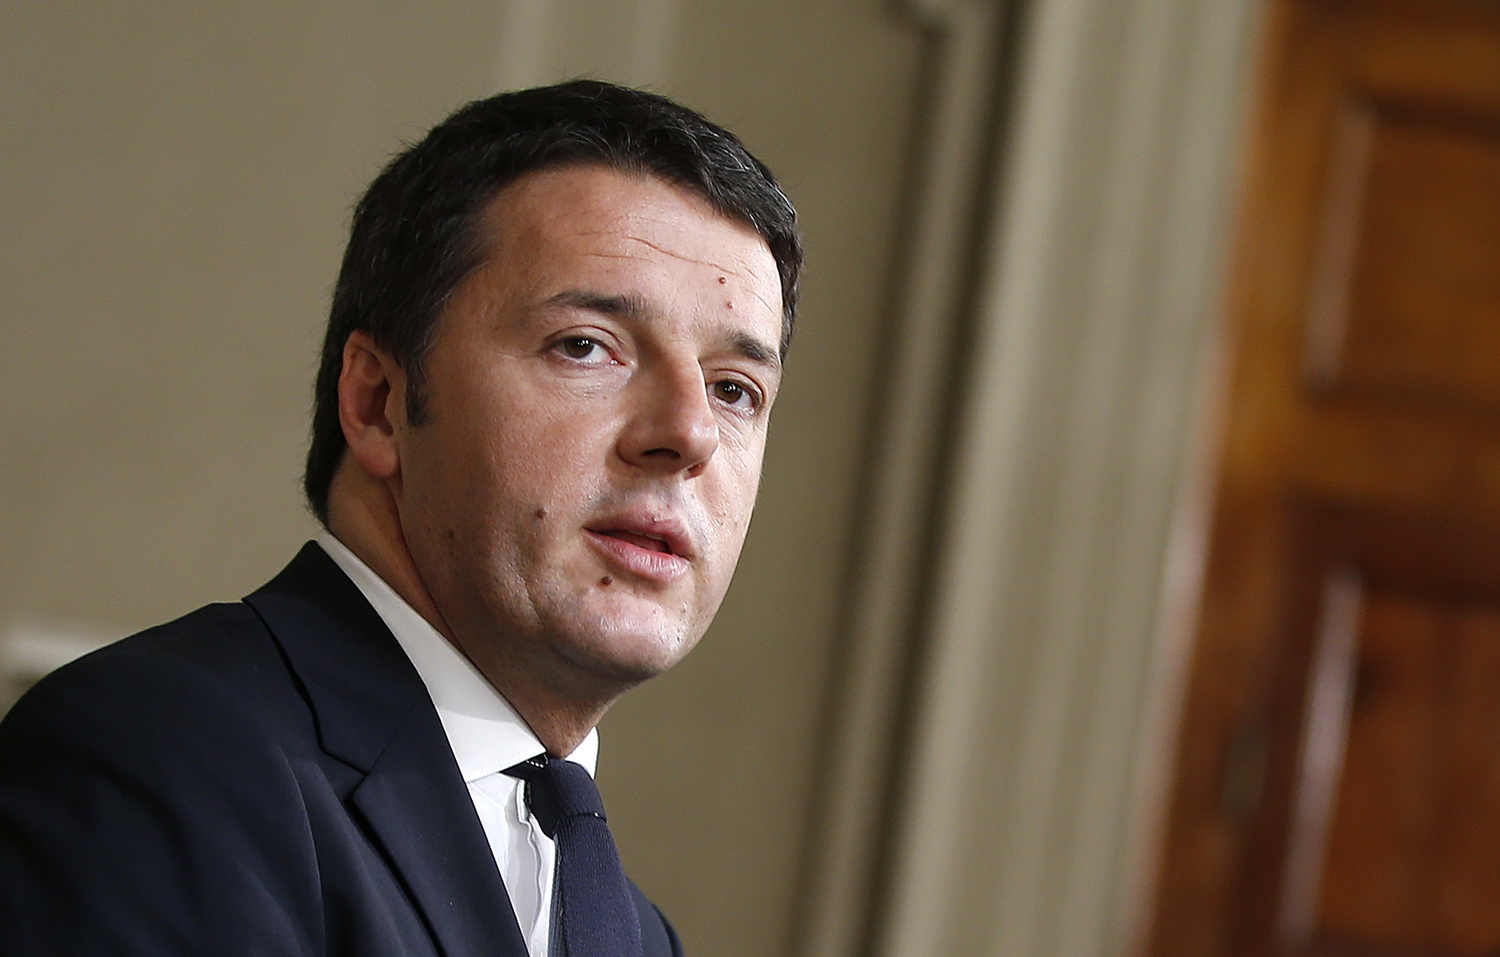 Matteo Renzi, Prime Minister of Italy